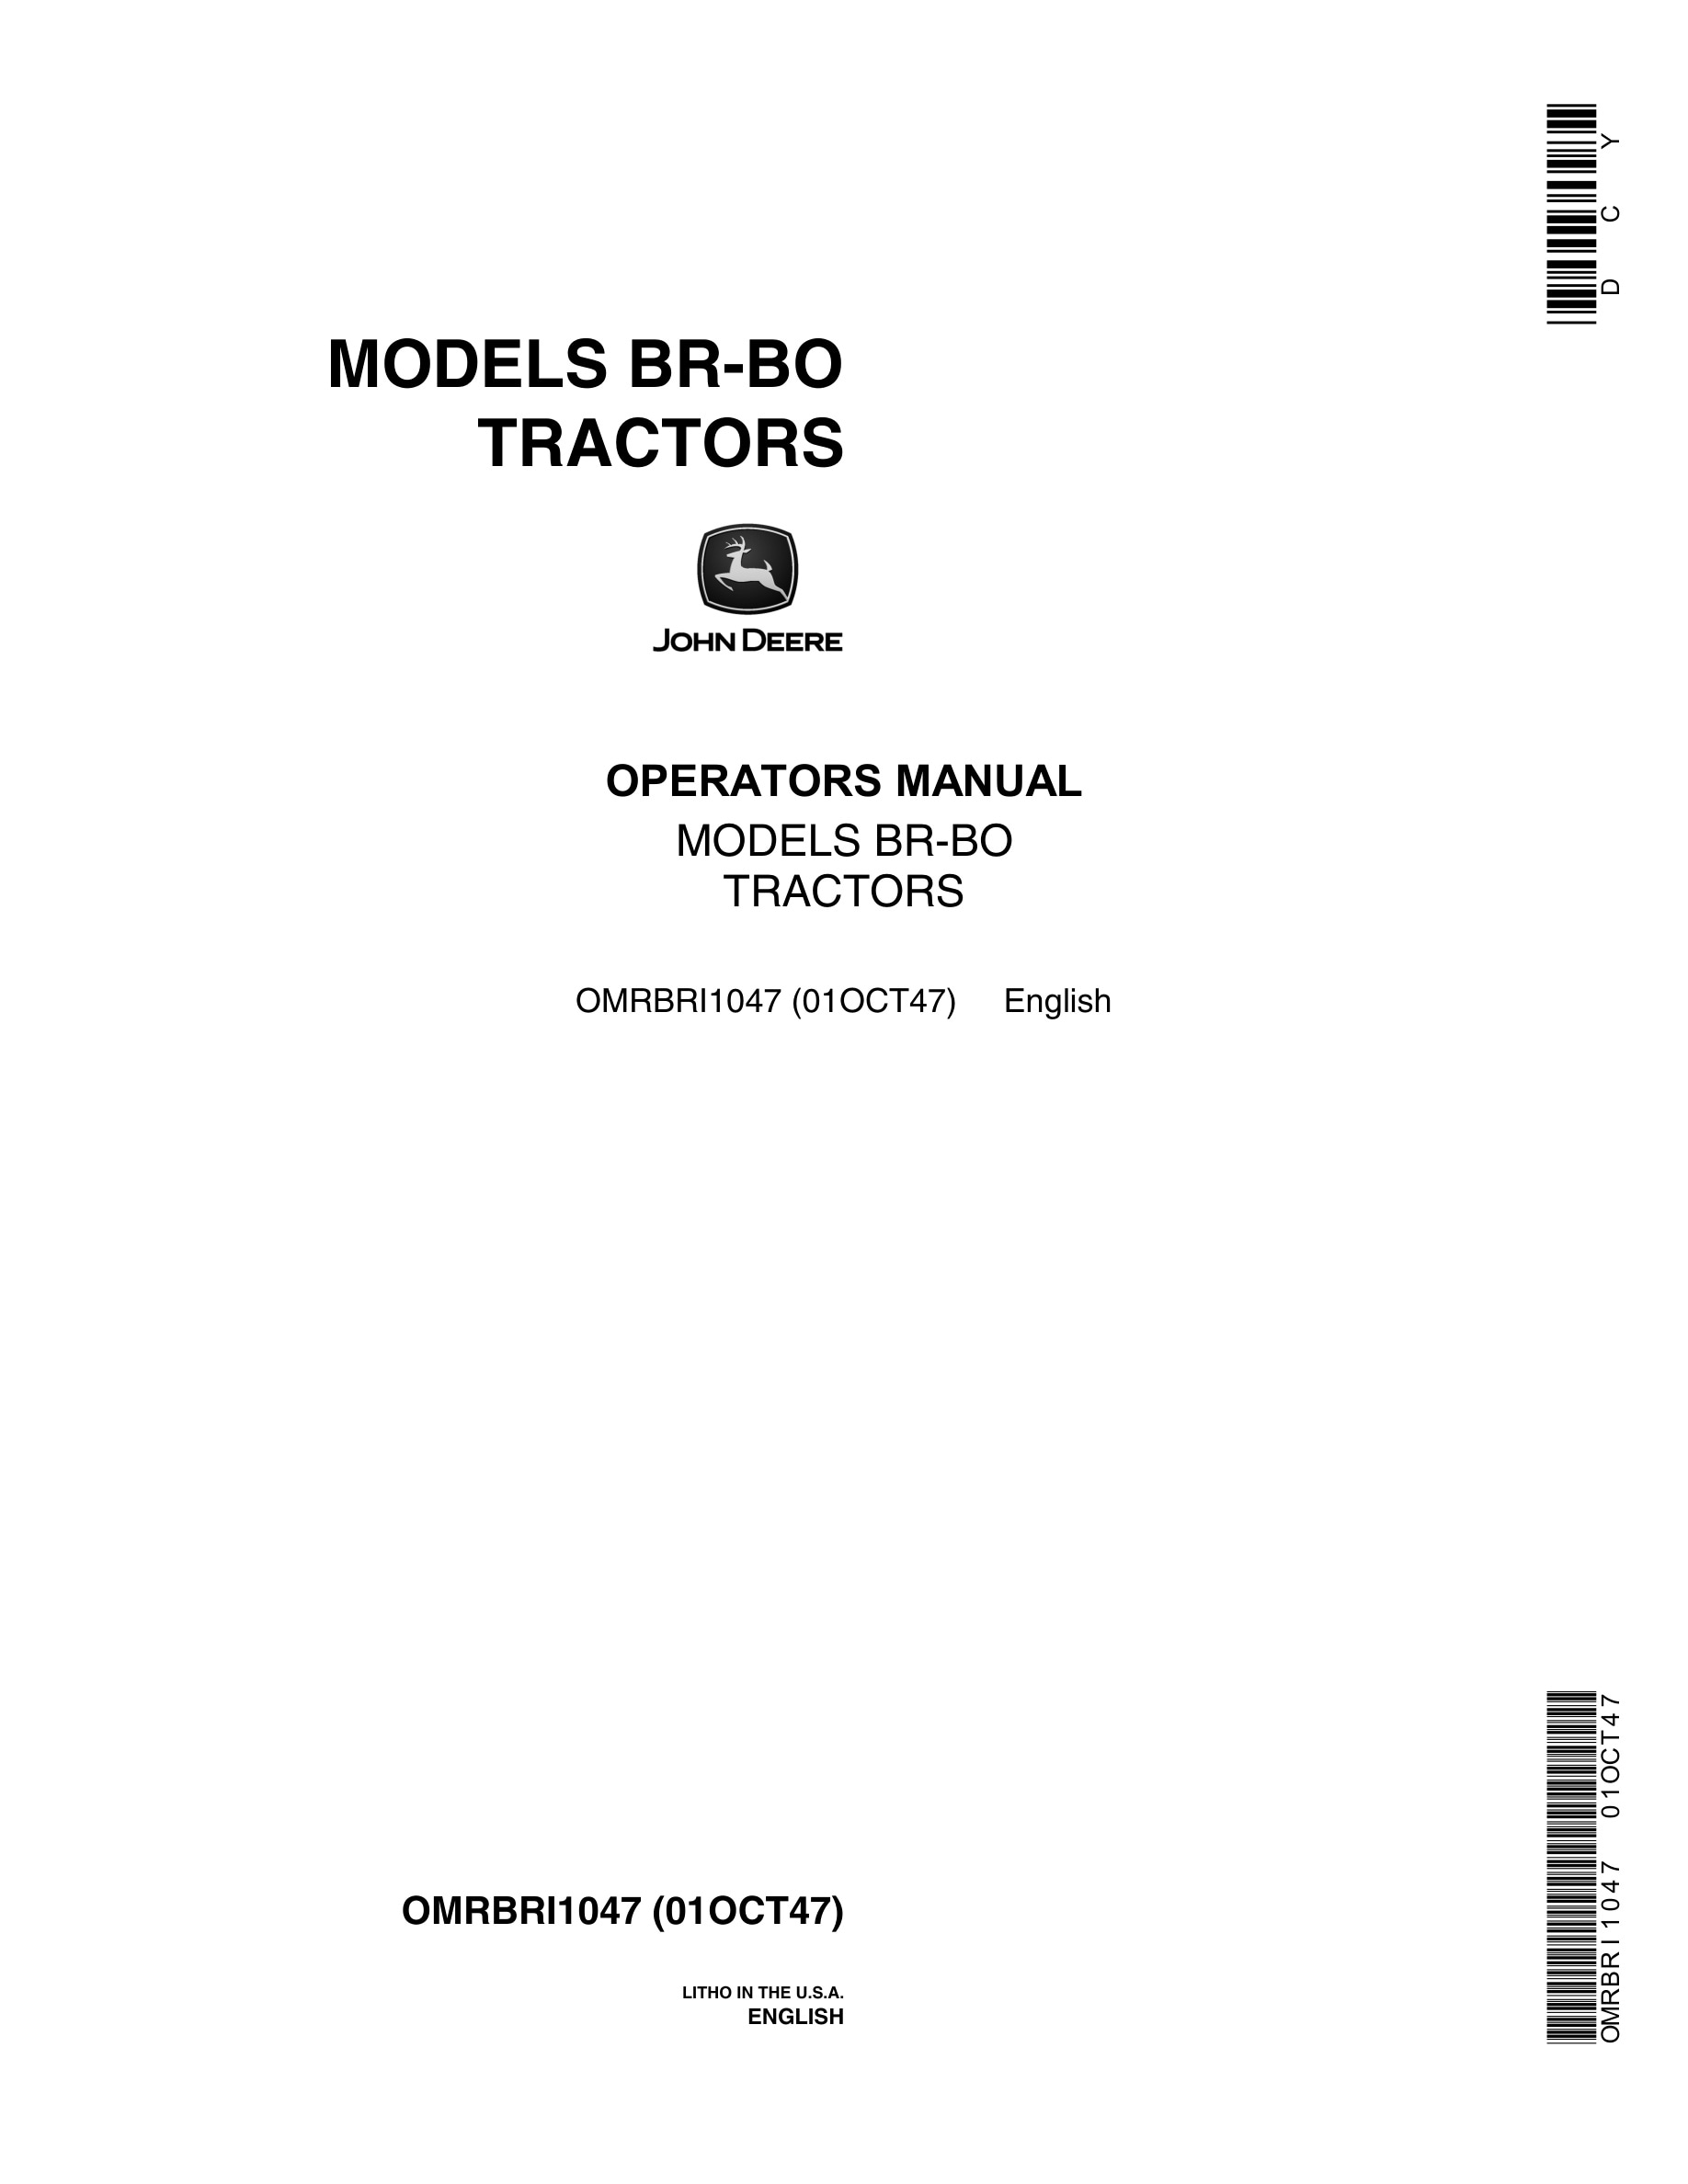 John Deere BR-BO Tractor Operator Manual OMRBRI1047-1